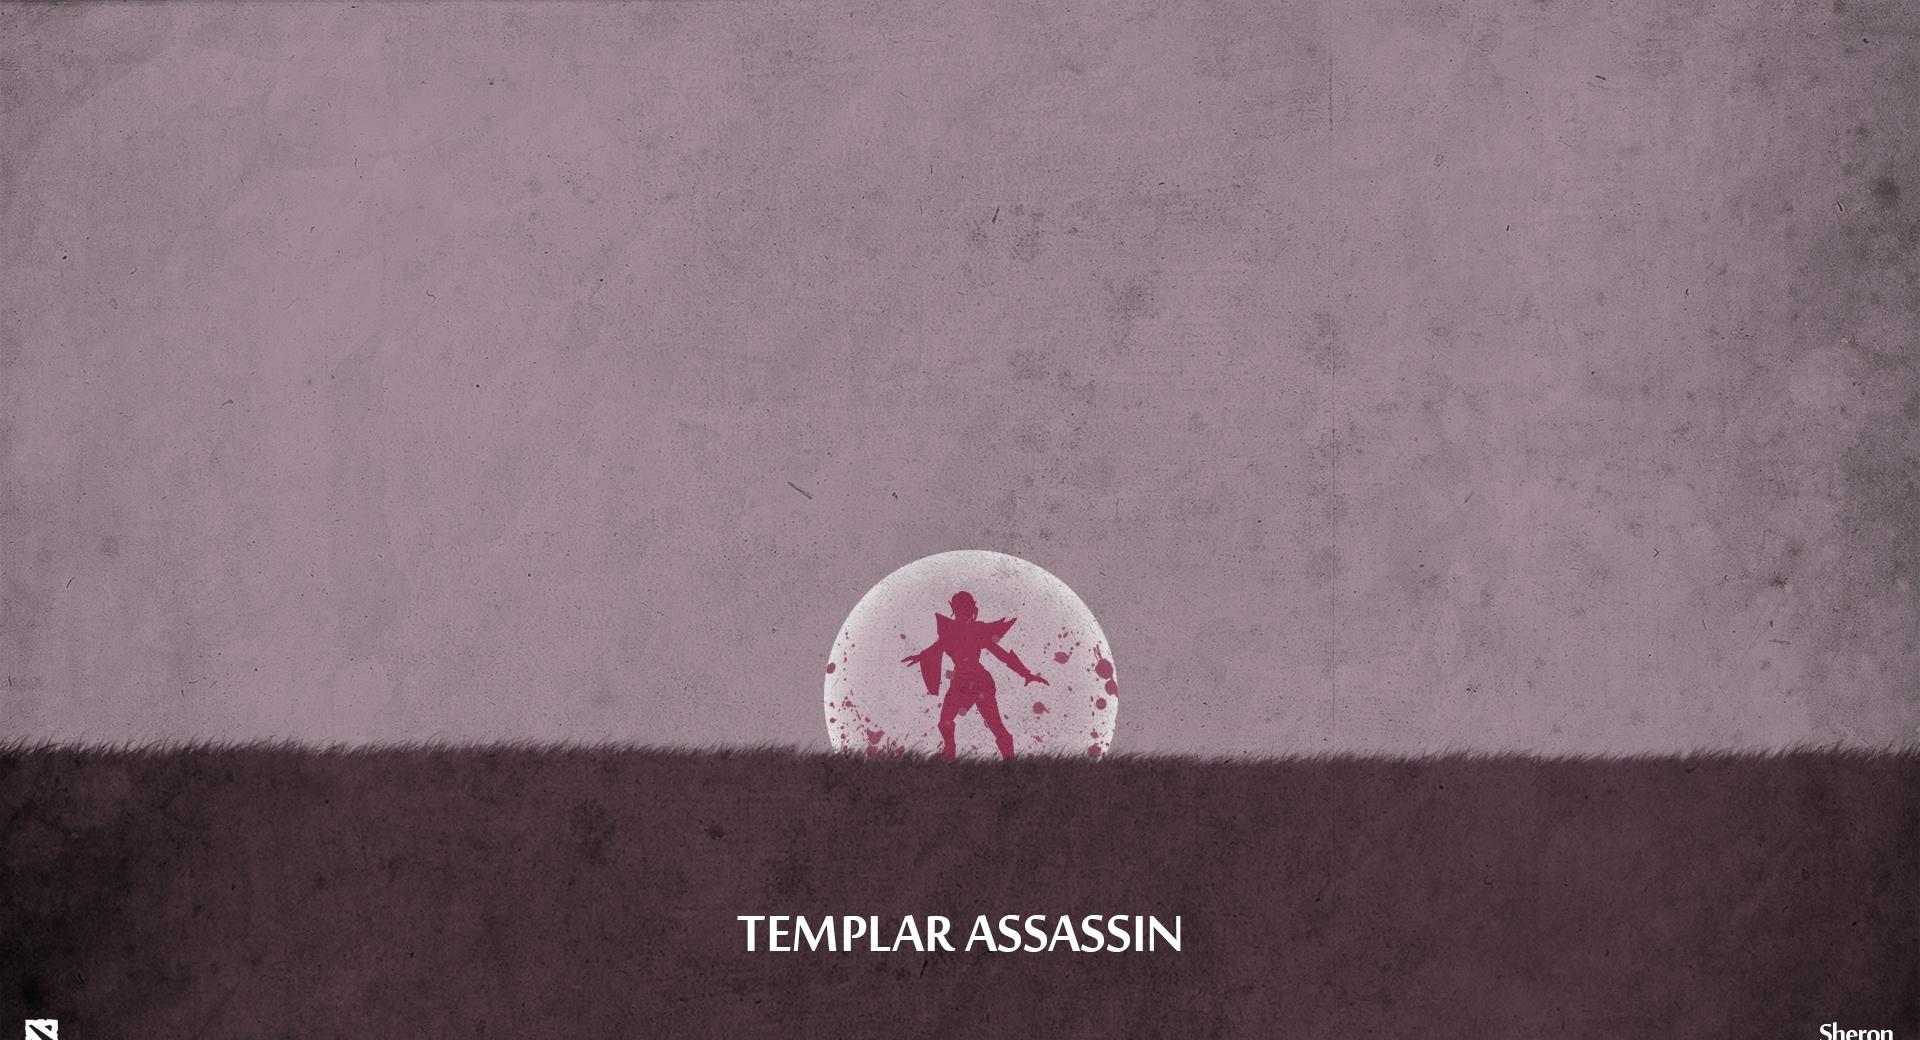 Templar Assassin - DotA 2 at 2048 x 2048 iPad size wallpapers HD quality